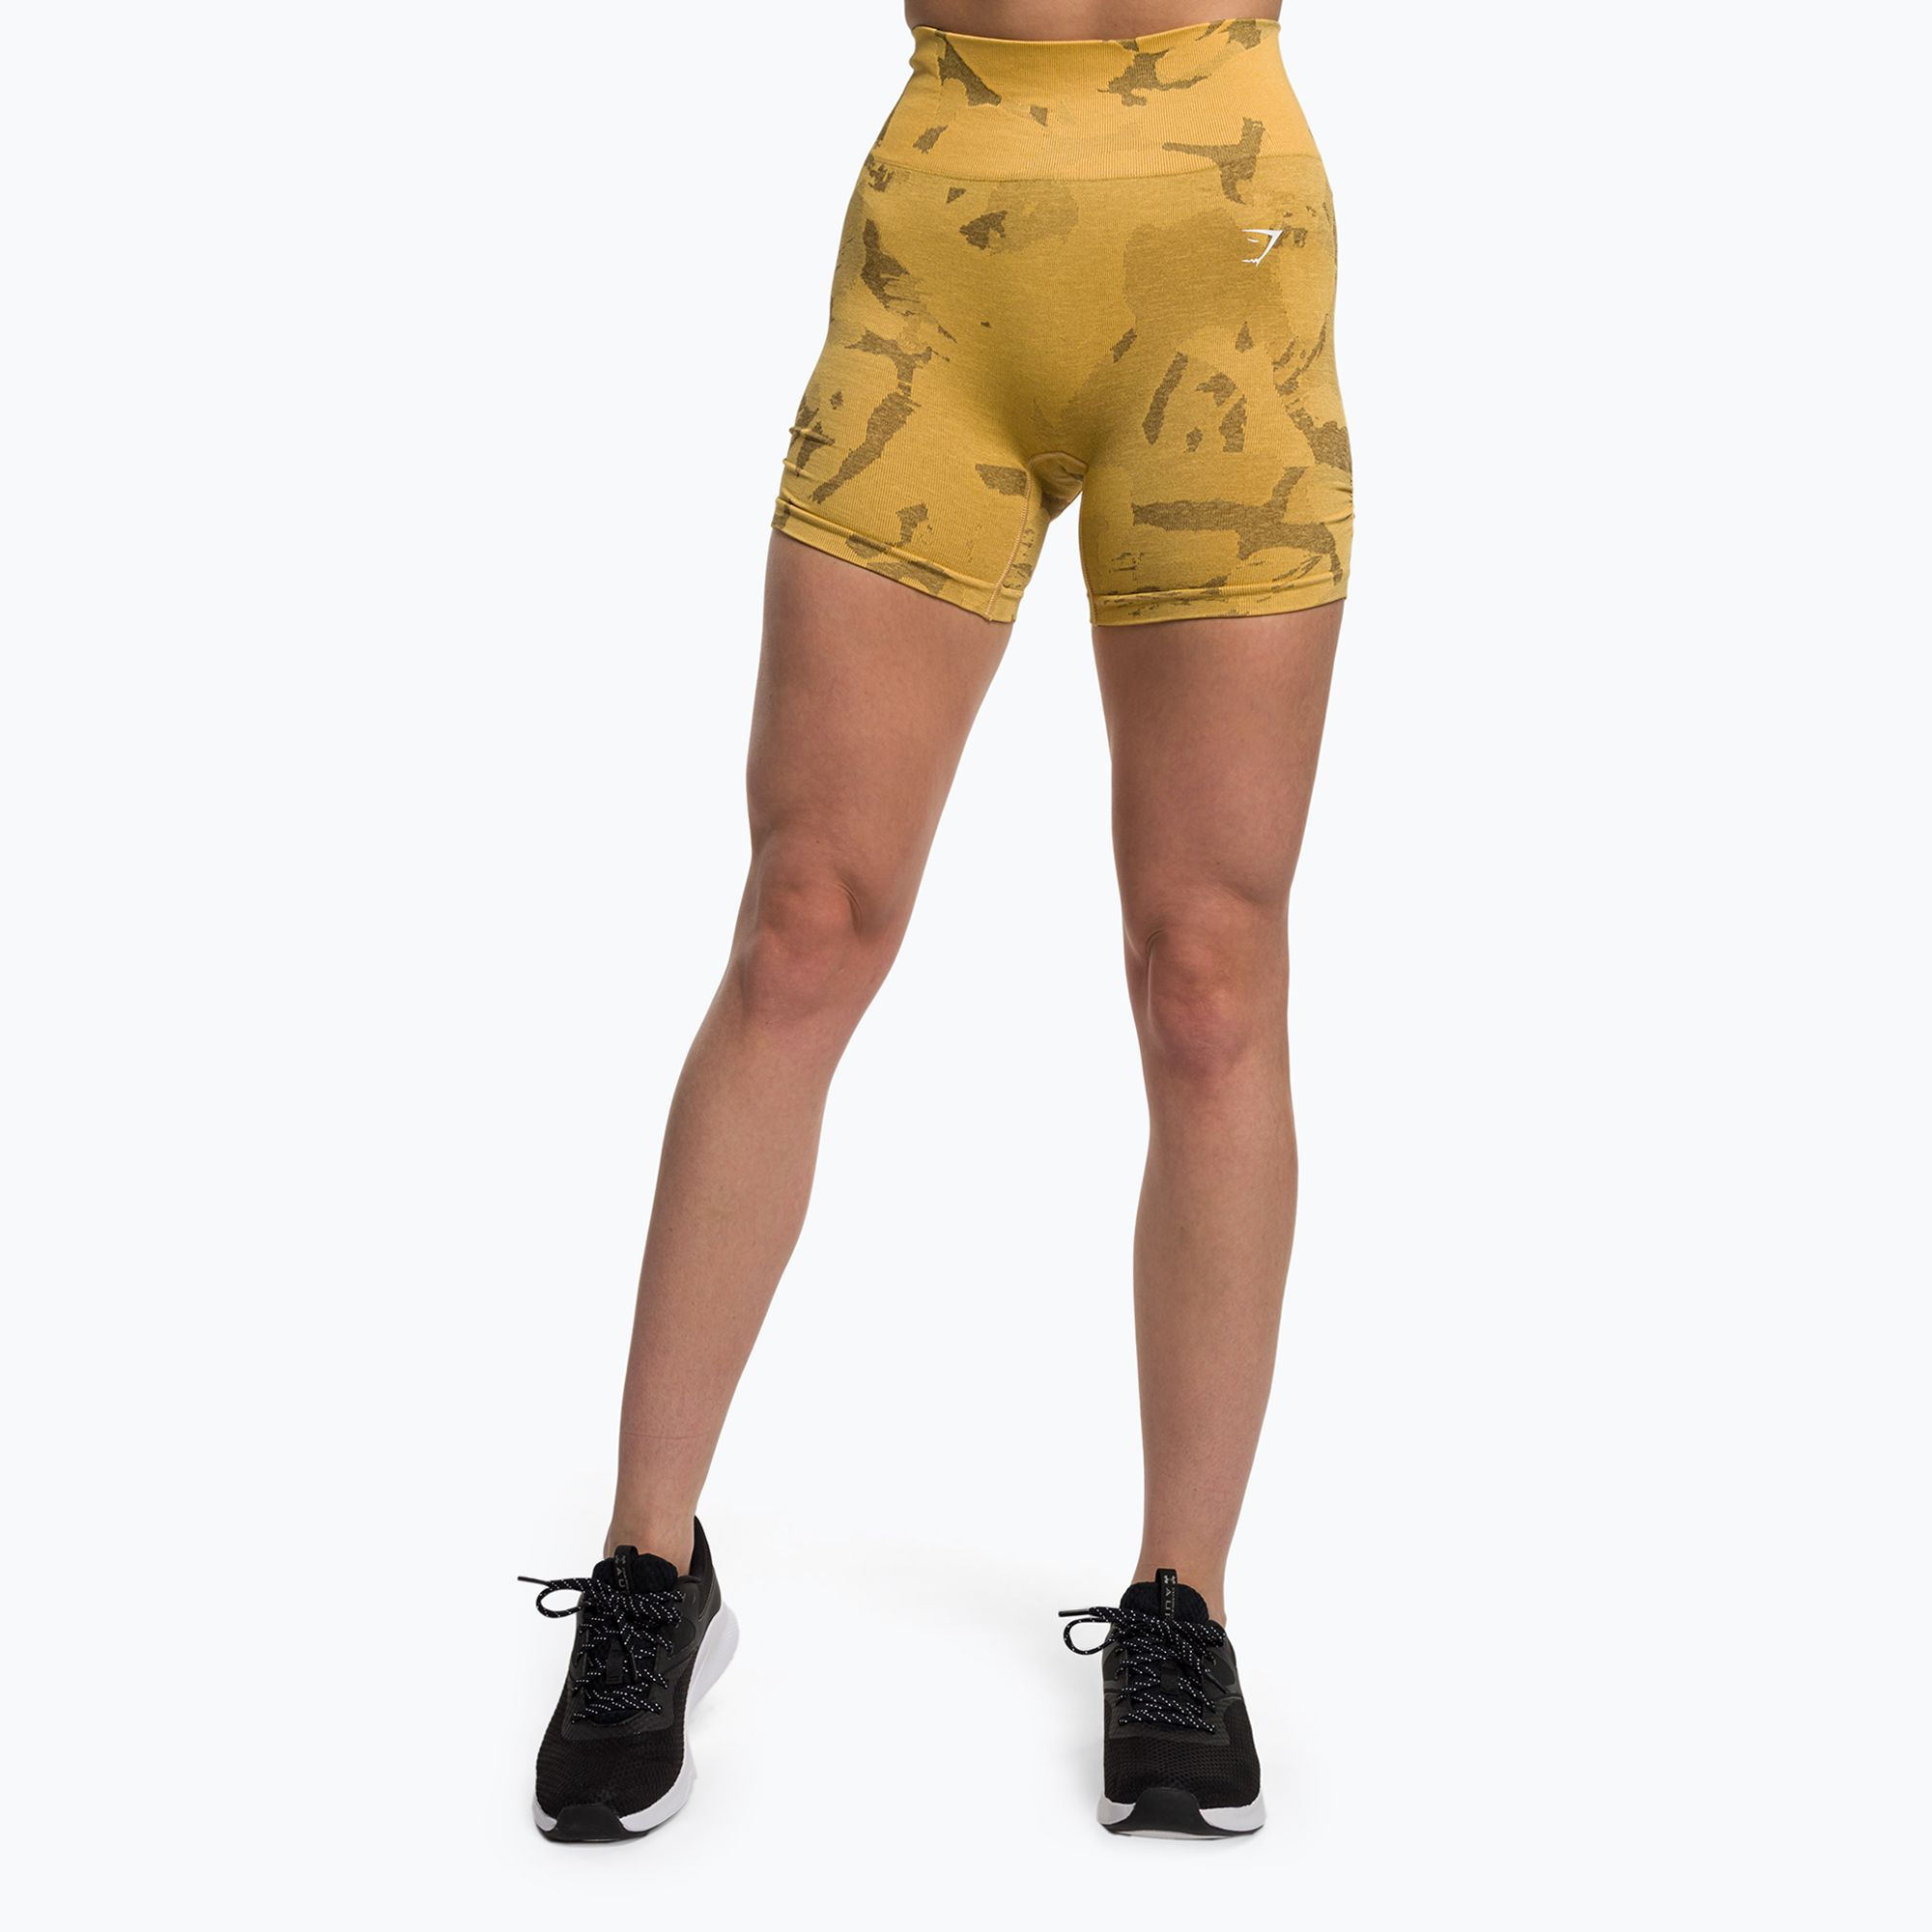 https://sportano.com/img/986c30c27a3d26a3ee16c136f92f4ff5/5/0/5057913509811_1-jpg/women-s-training-shorts-gymshark-adapt-camo-savanna-seamless-indian-yellow-0.jpg